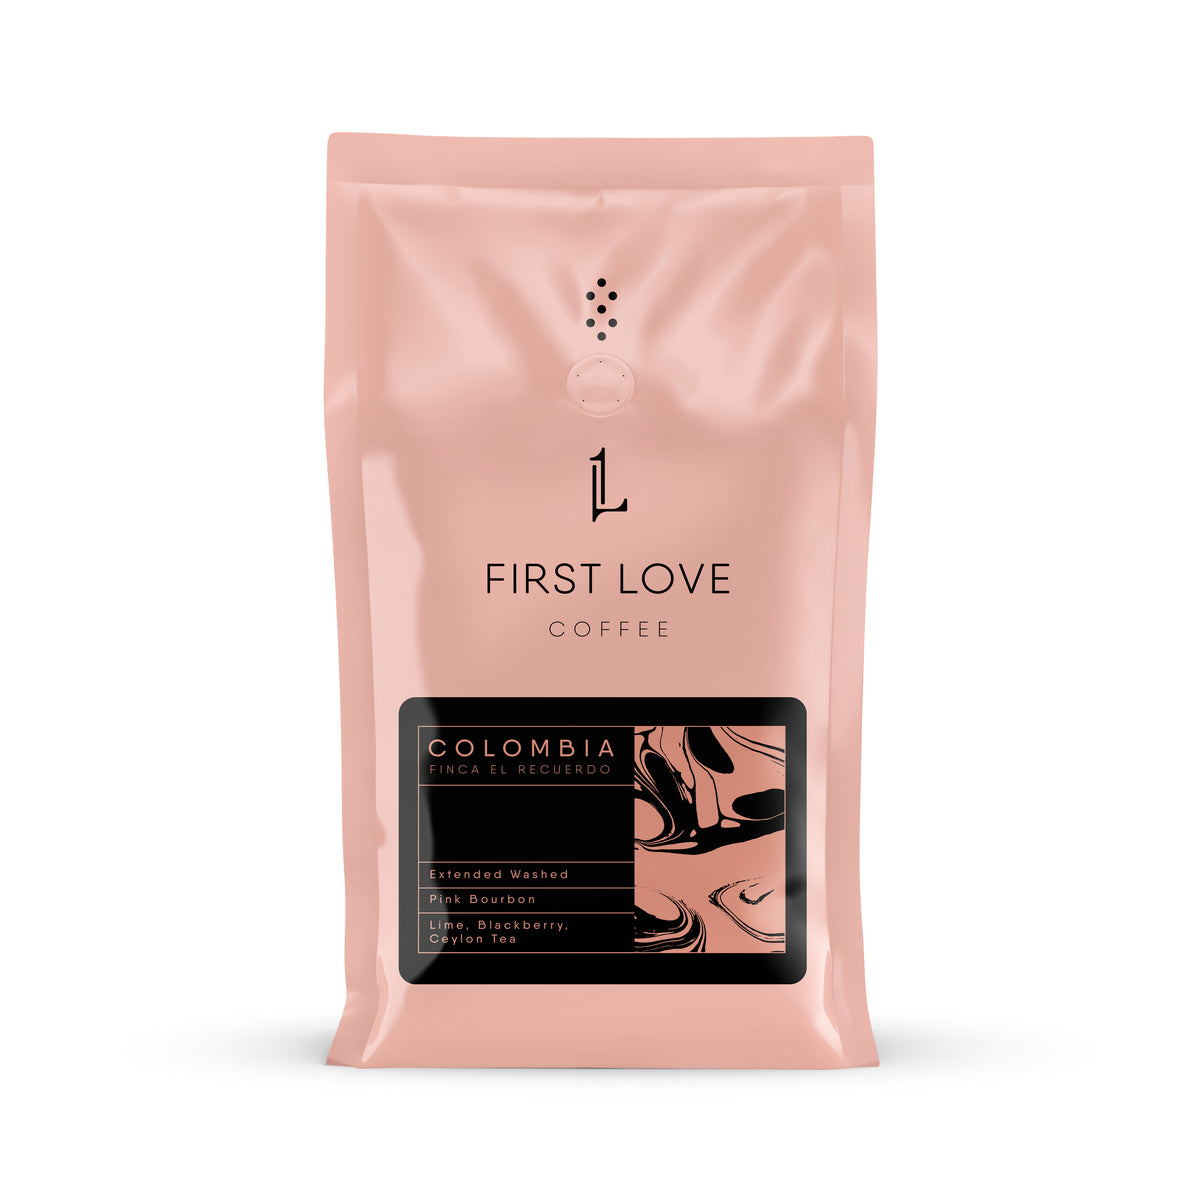 Finca El Recuerdo, Colombia First Love Coffee First Love Coffee